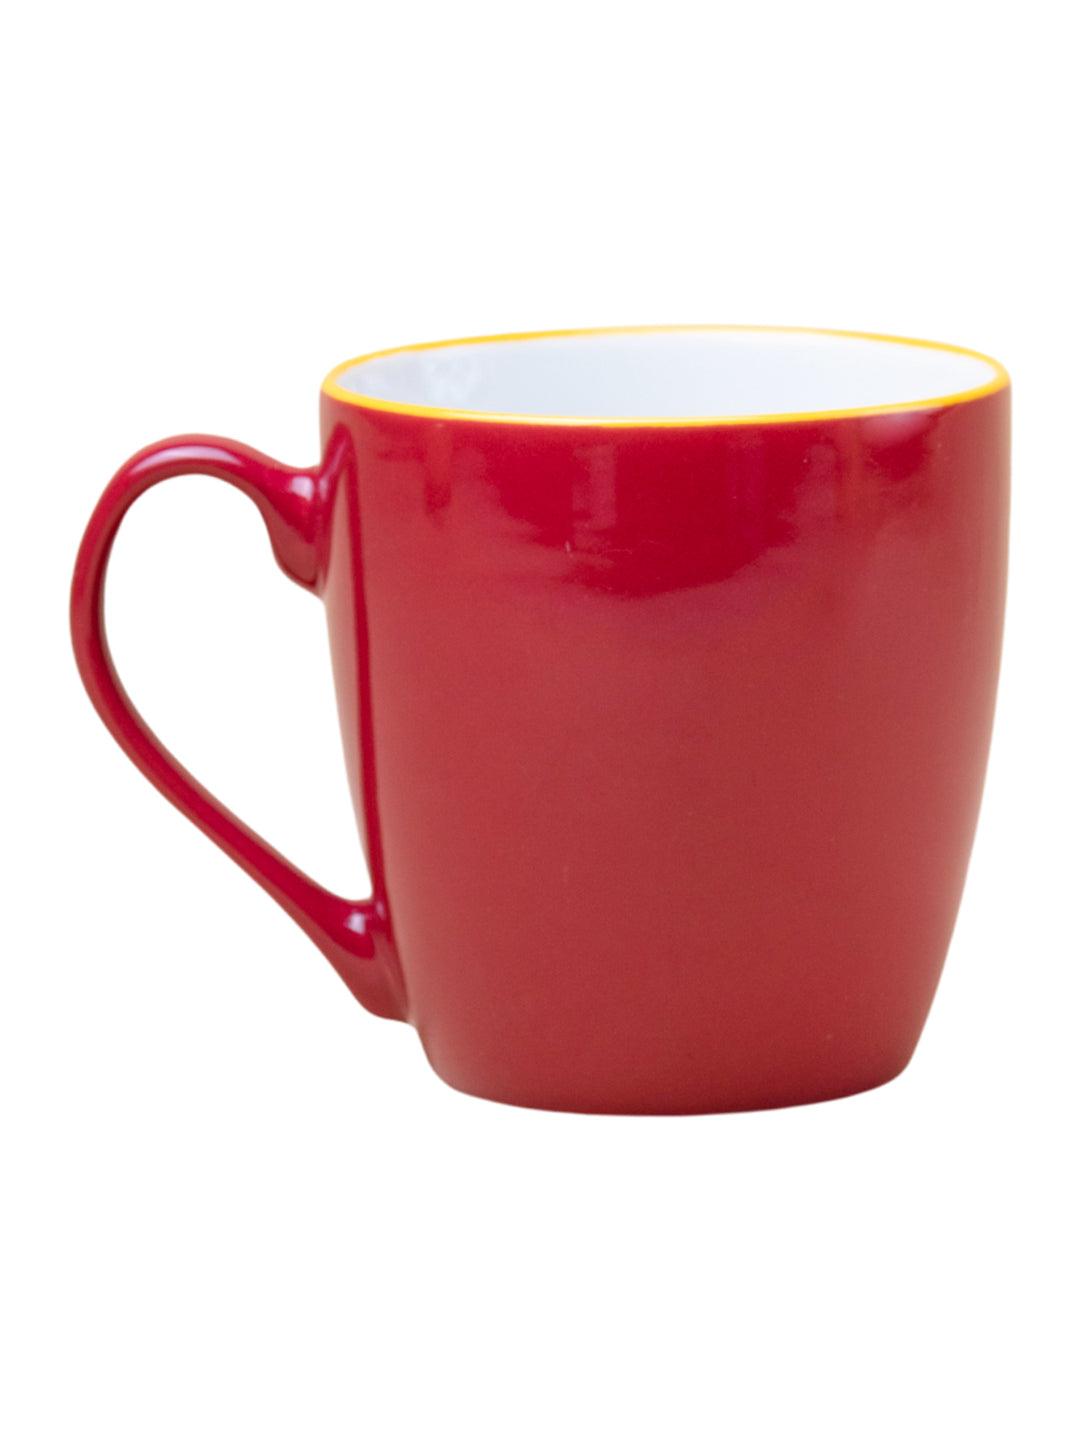 Red Ceramic Coffee Mug - 400mL "Oremium Coffee For A Beautiful Morning" - 5